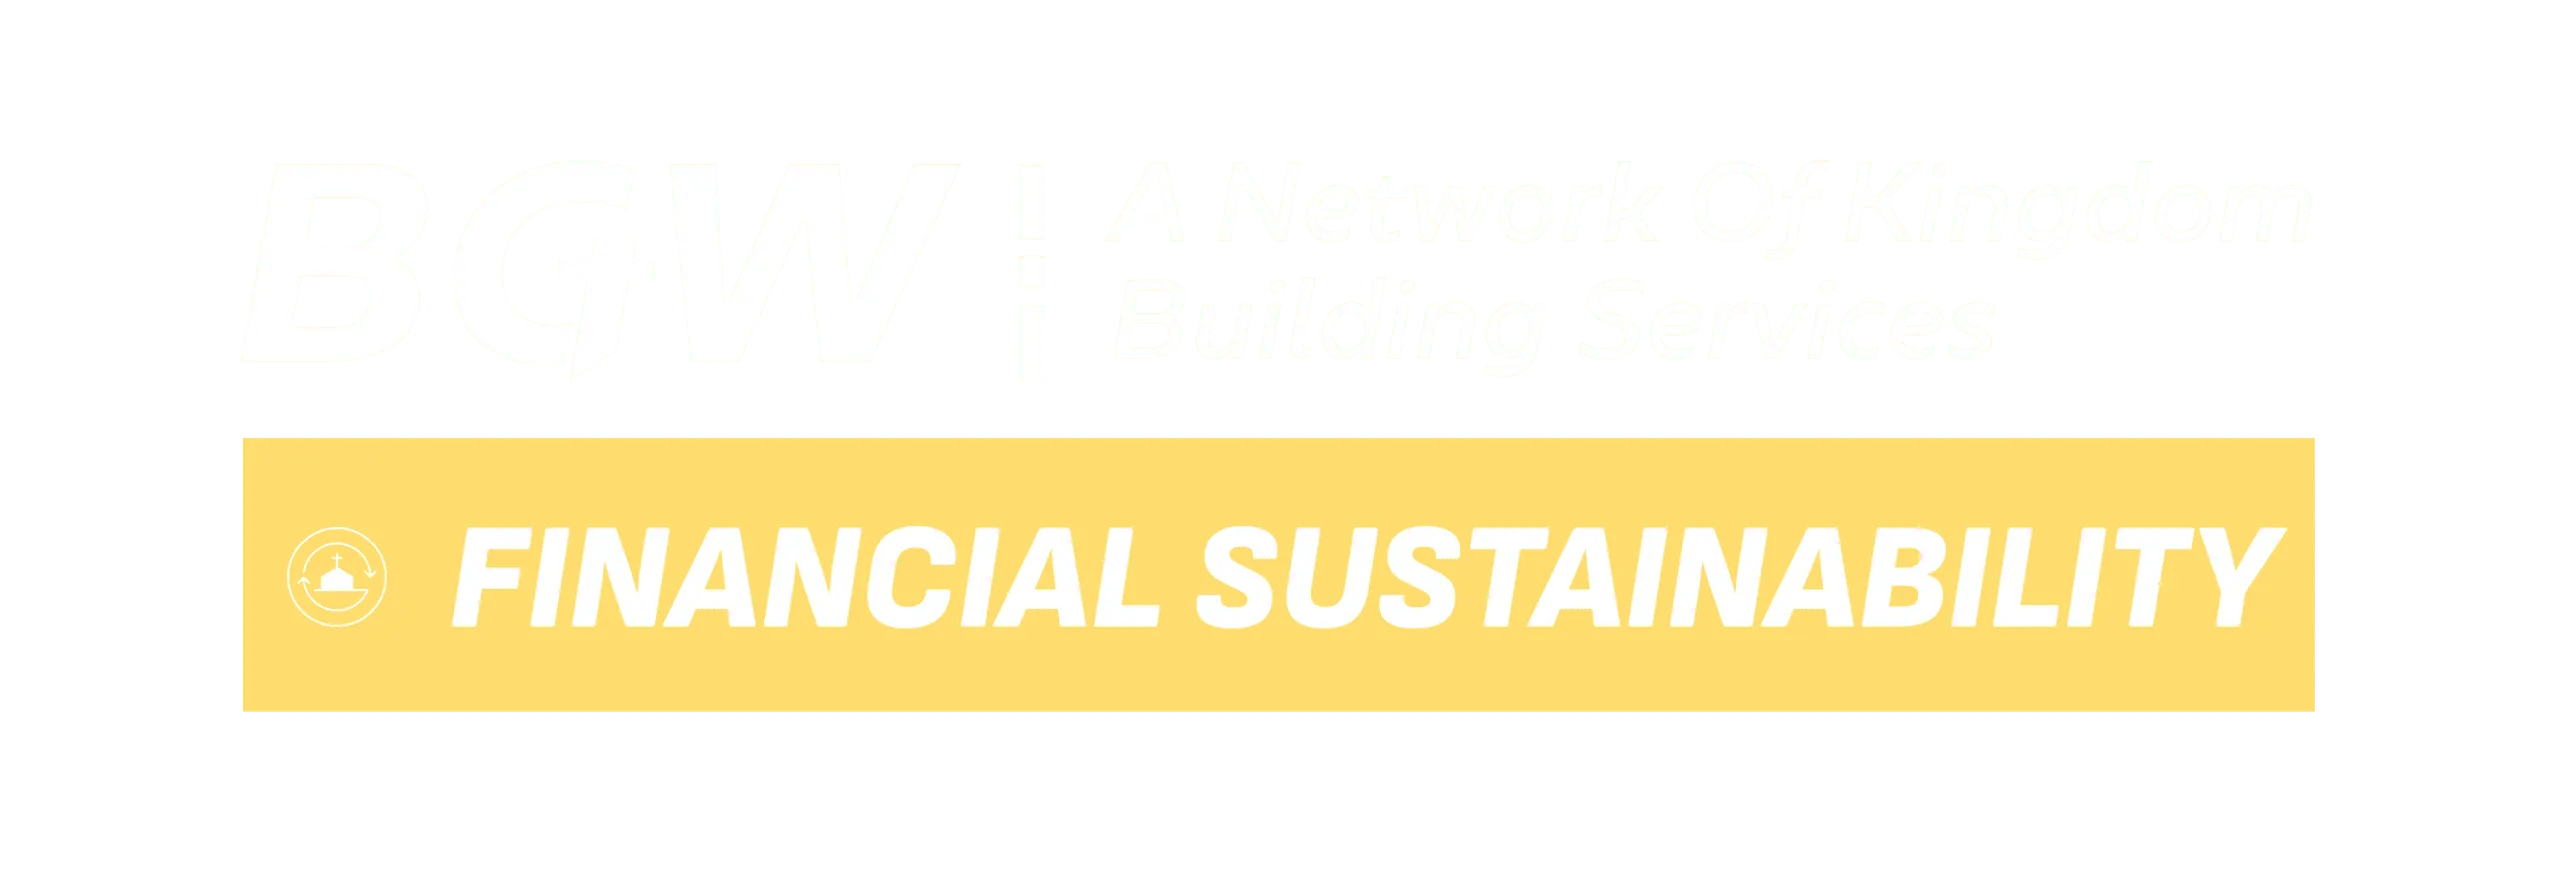 BGW Architects Financial Sustainability church building